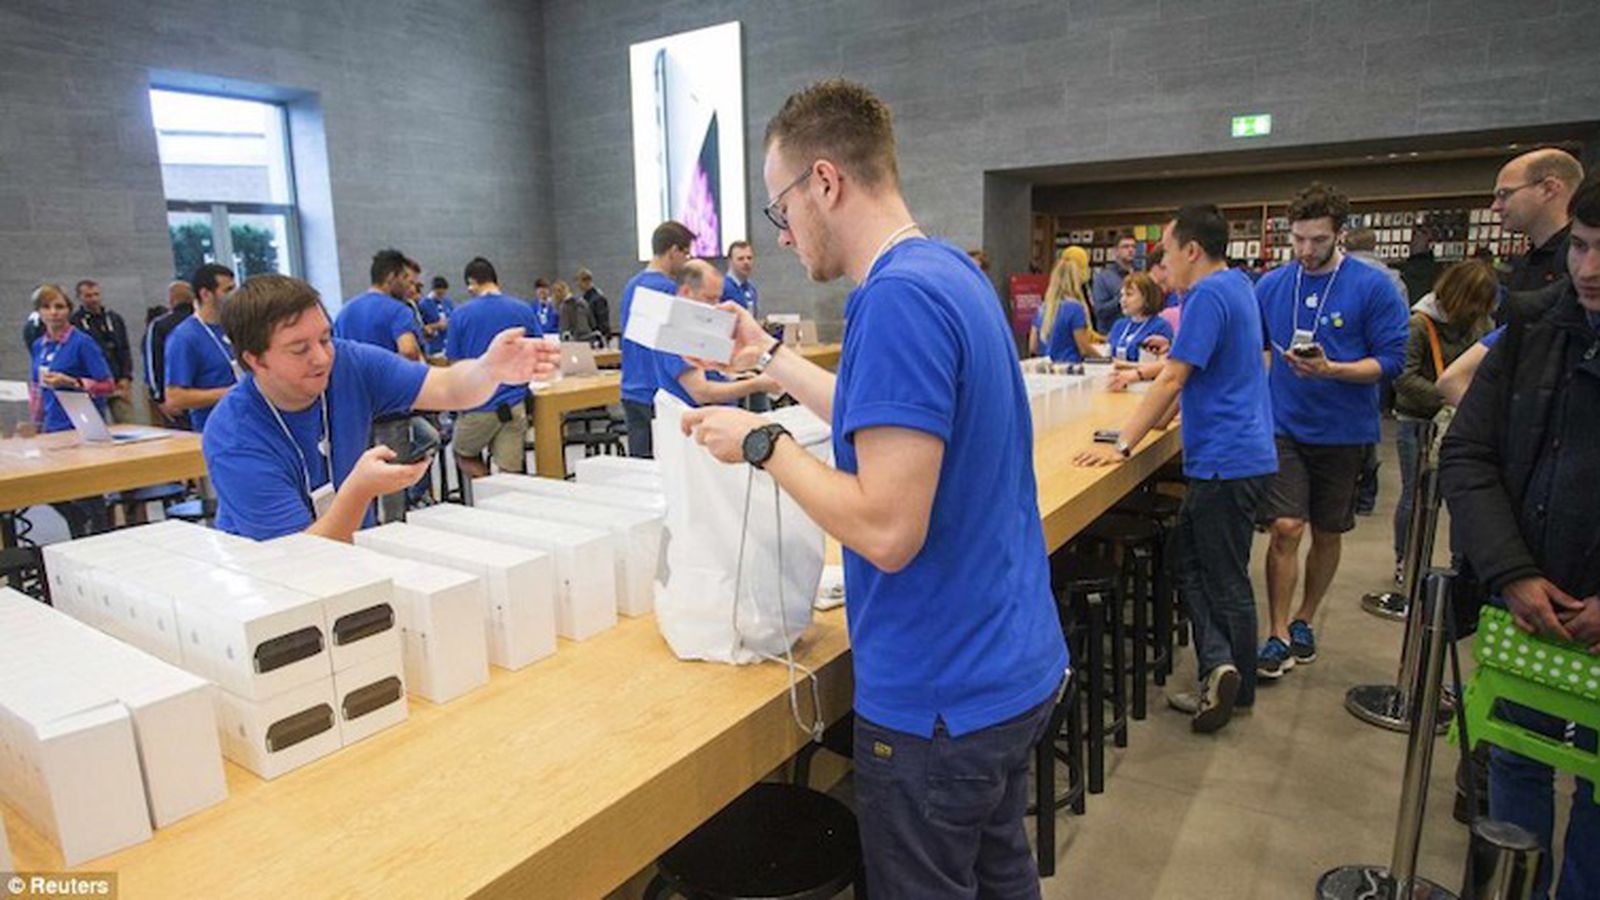 $16,000 Worth of iPhones Stolen from Charlotte Apple Store in Apparent  Inside Job - MacRumors